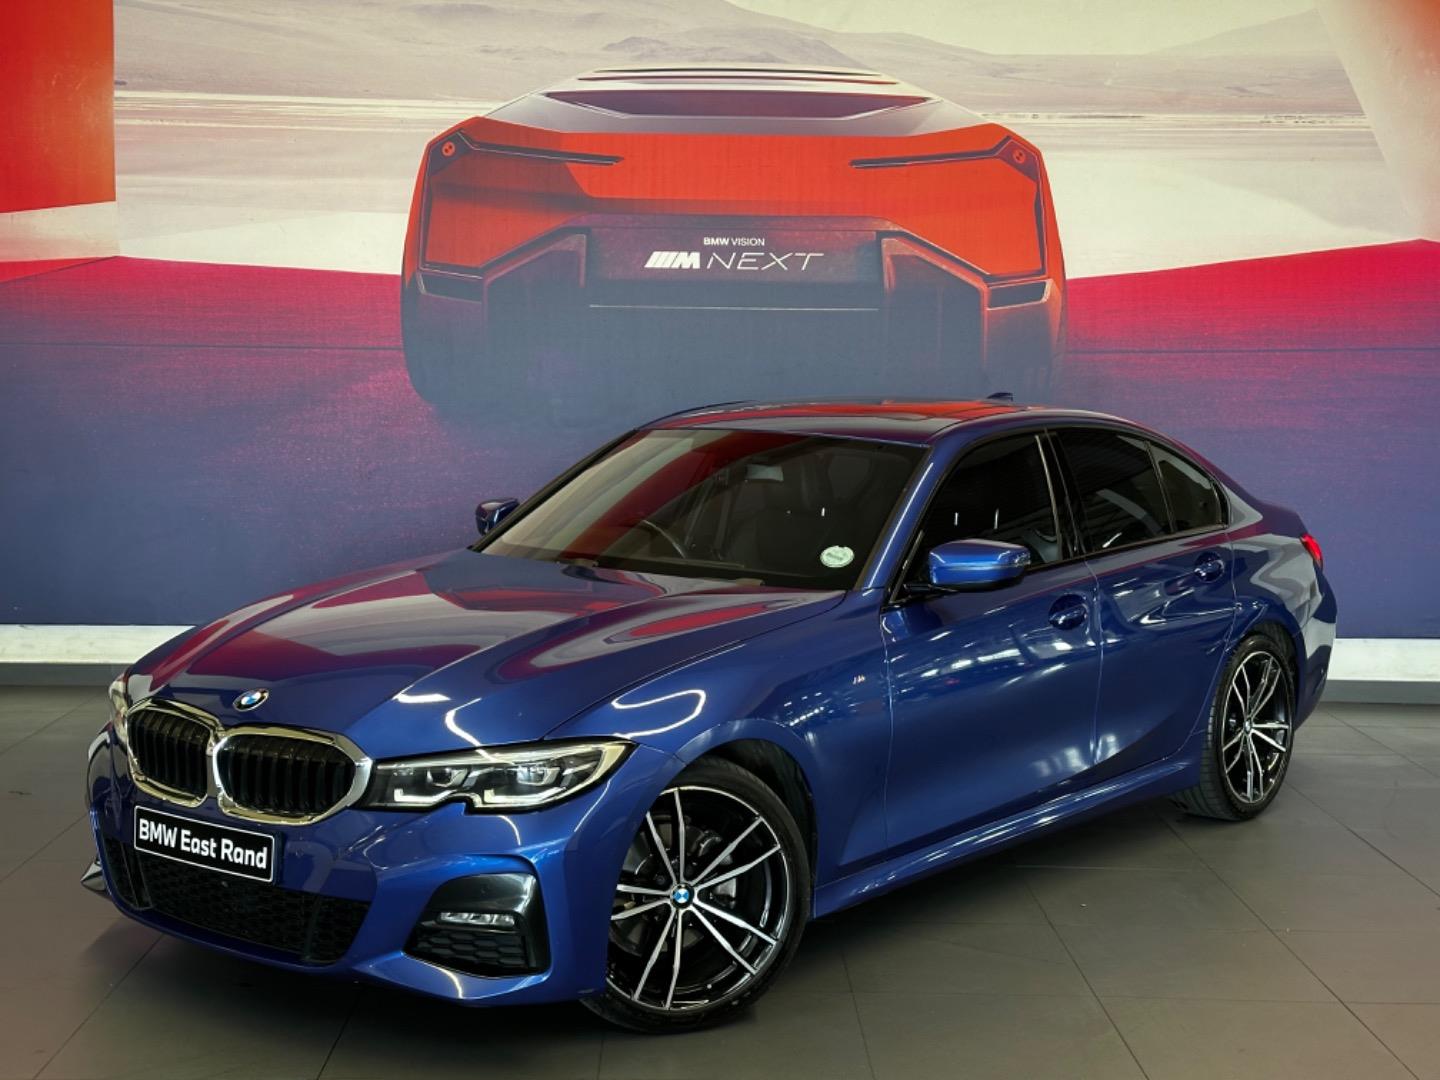 2019 BMW 3 Series 320d M Sport Launch Edition